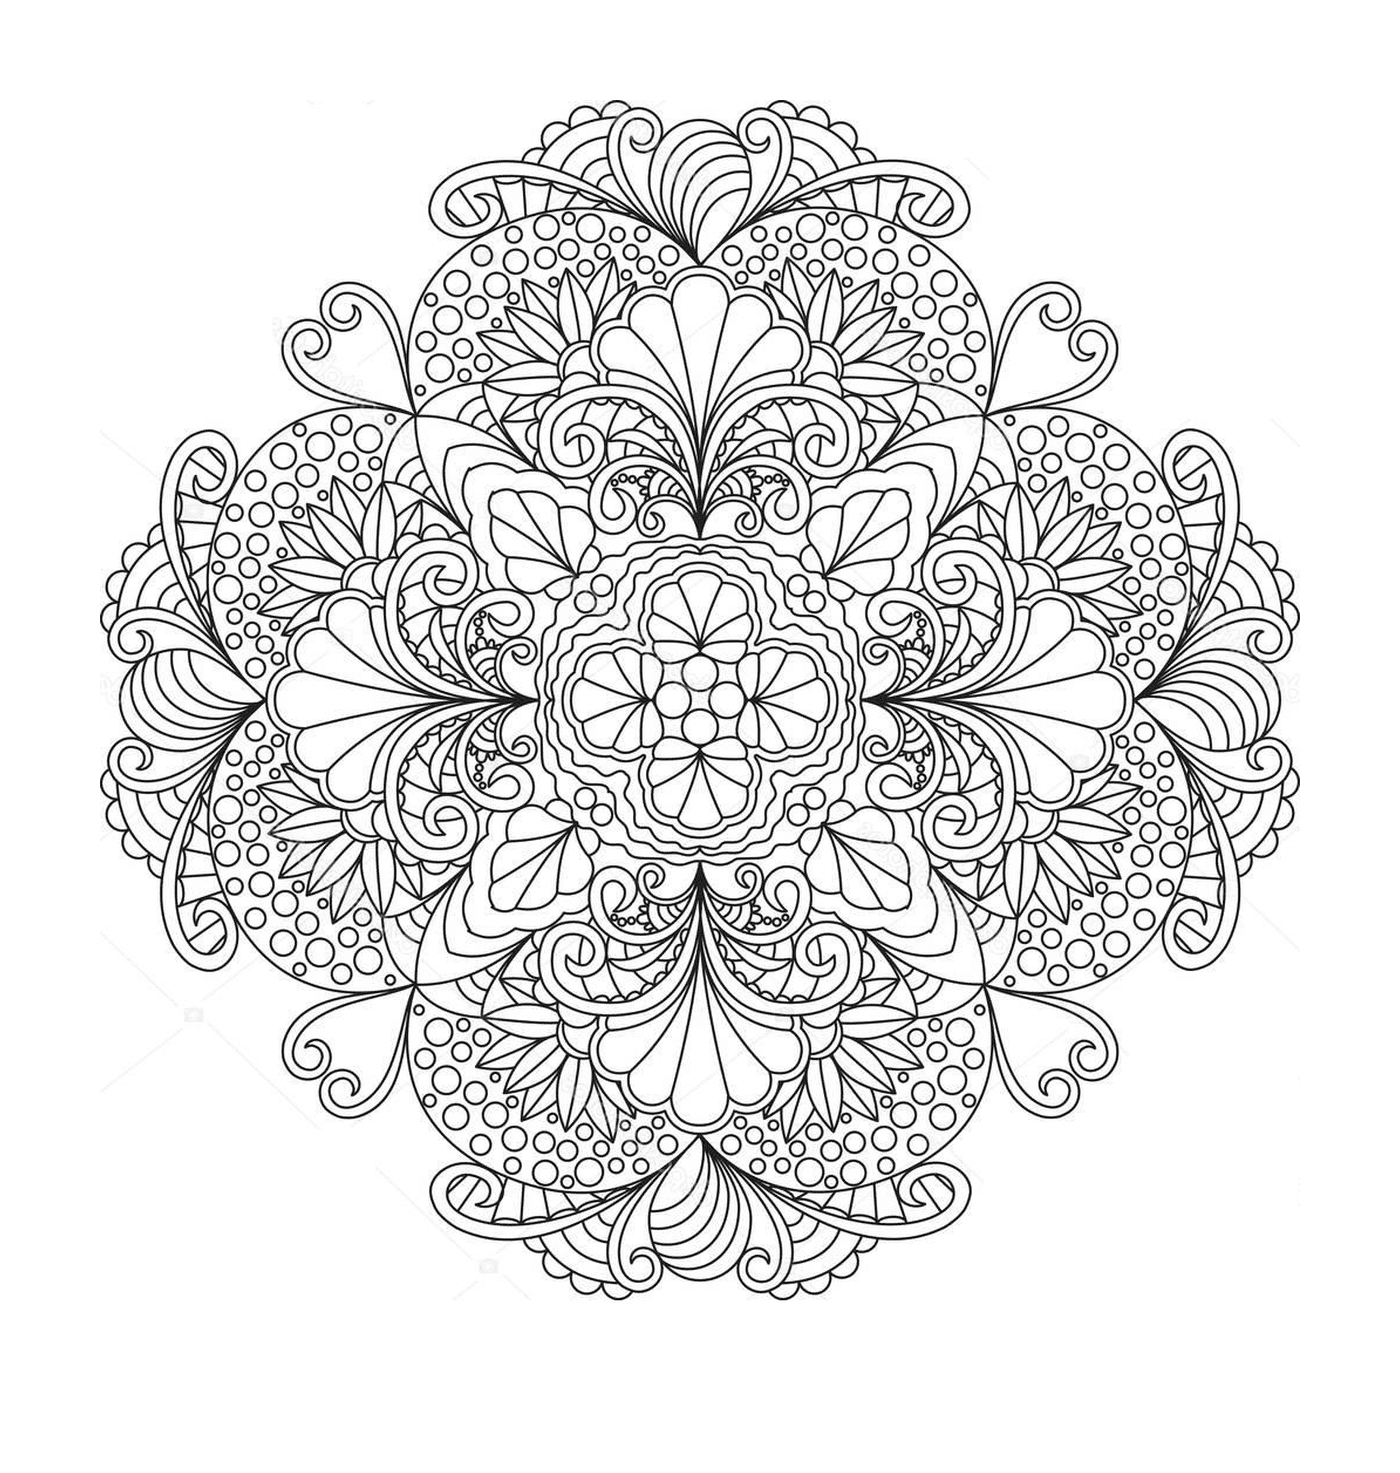  Mandala of flowers 